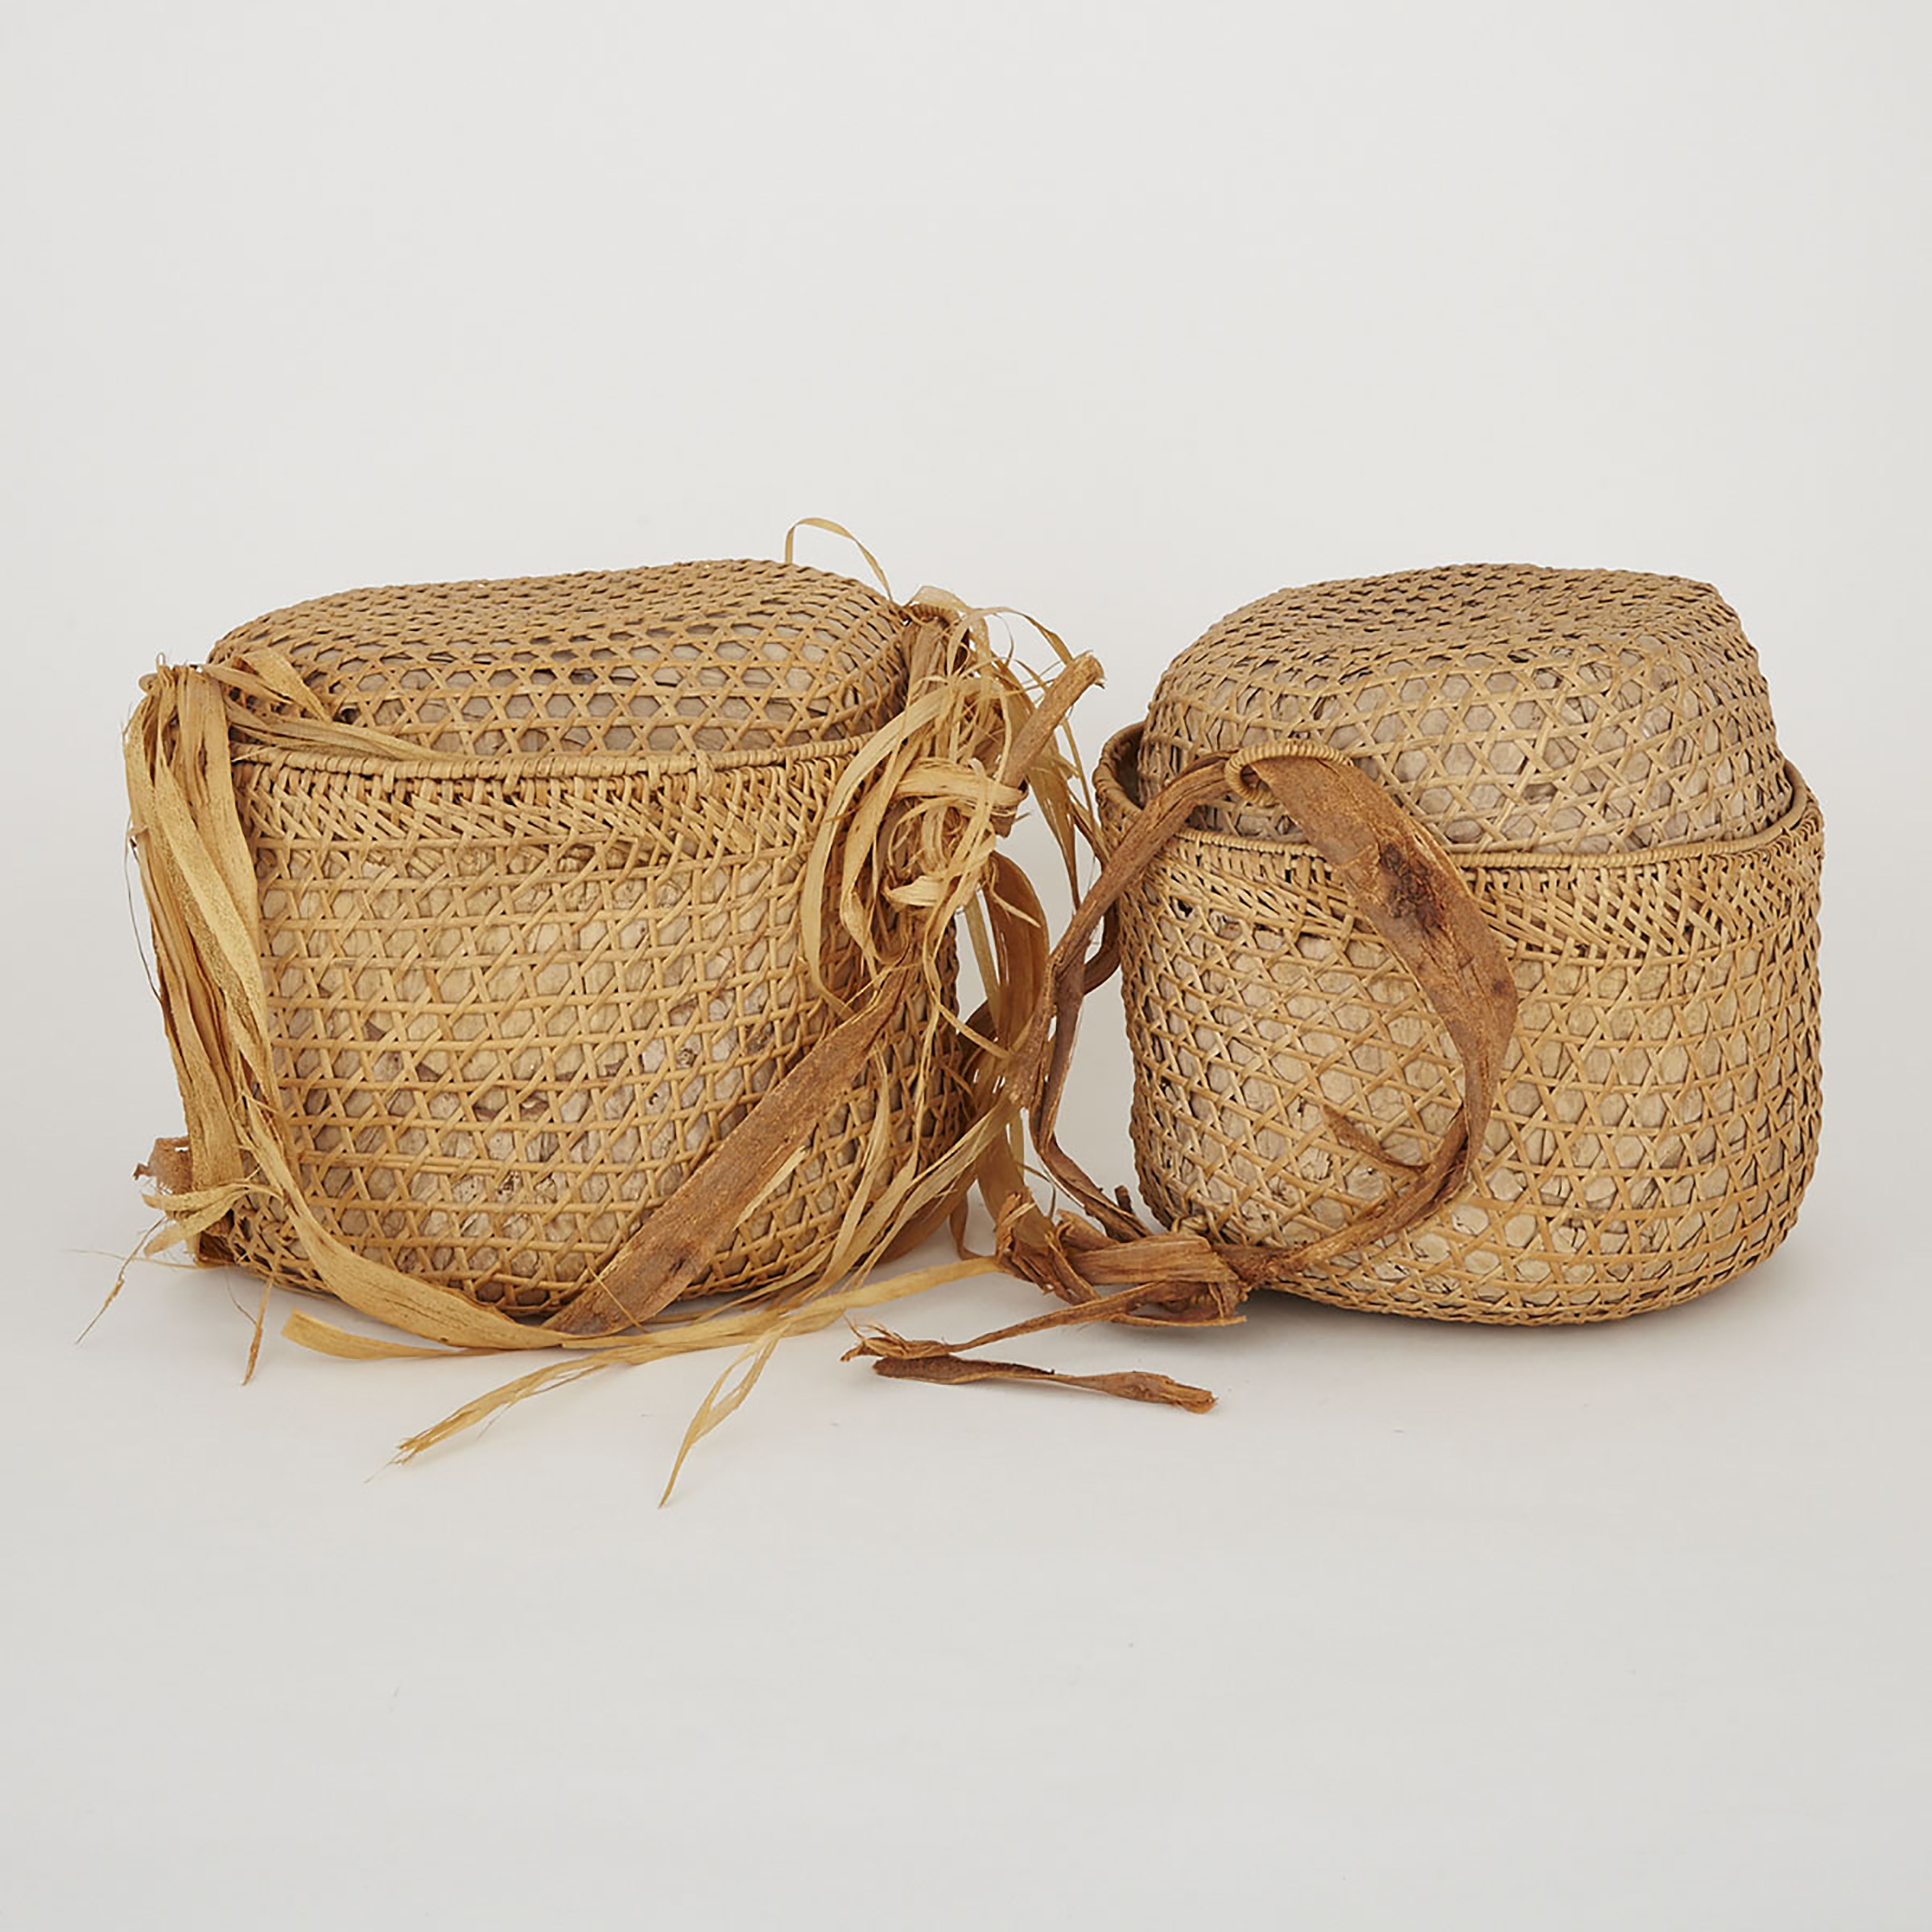 Two Woven Fibre Lidded Baskets, Africa